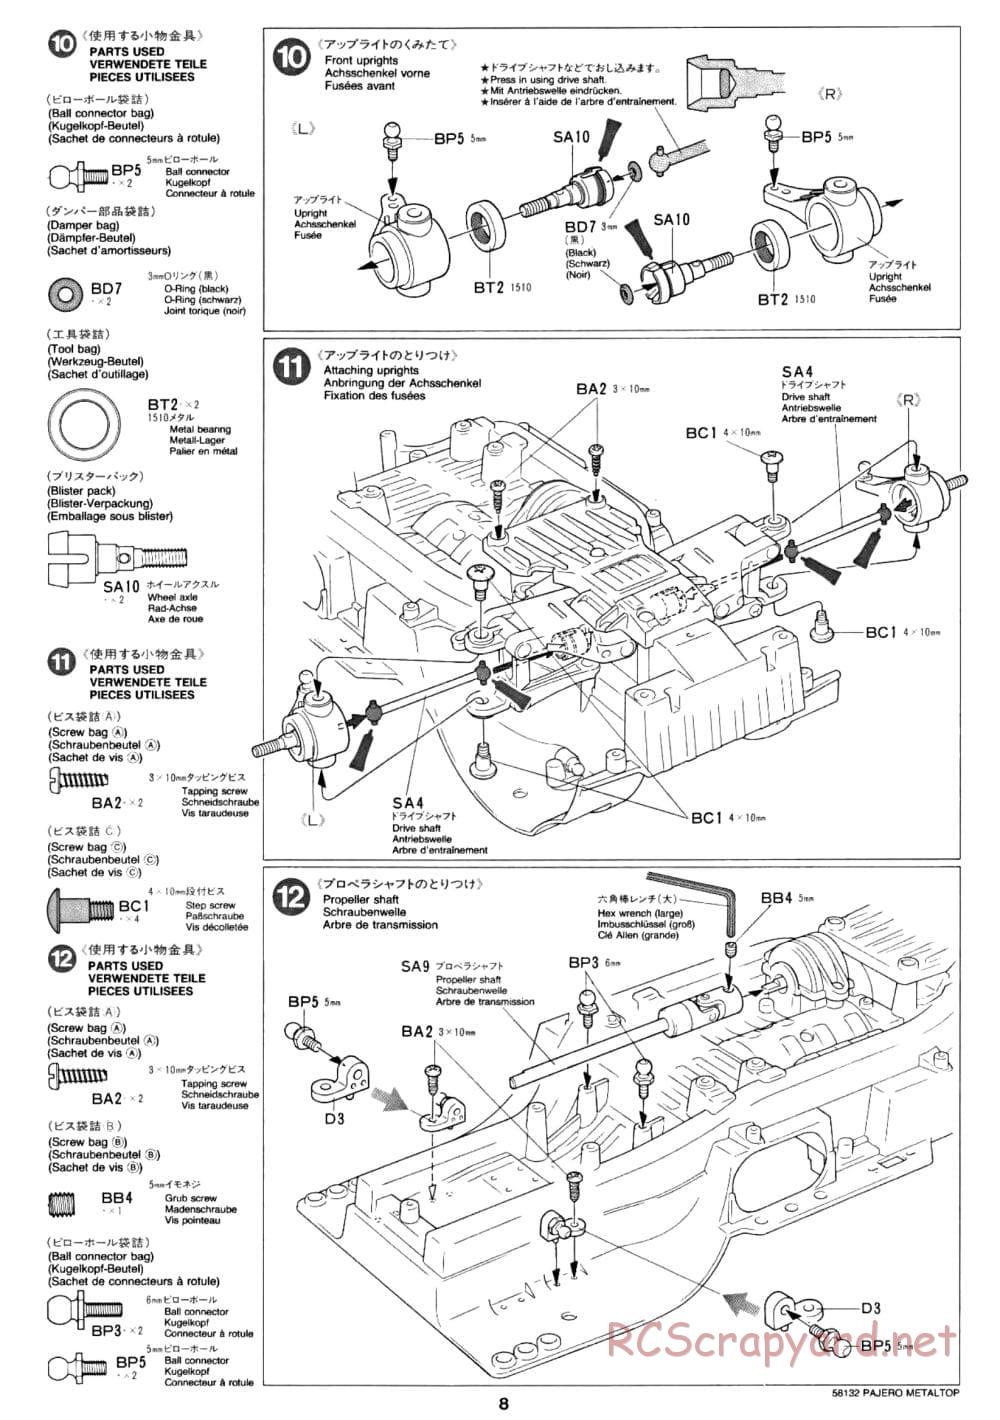 Tamiya - Mitsubishi Pajero Metaltop Wide - CC-01 Chassis - Manual - Page 8